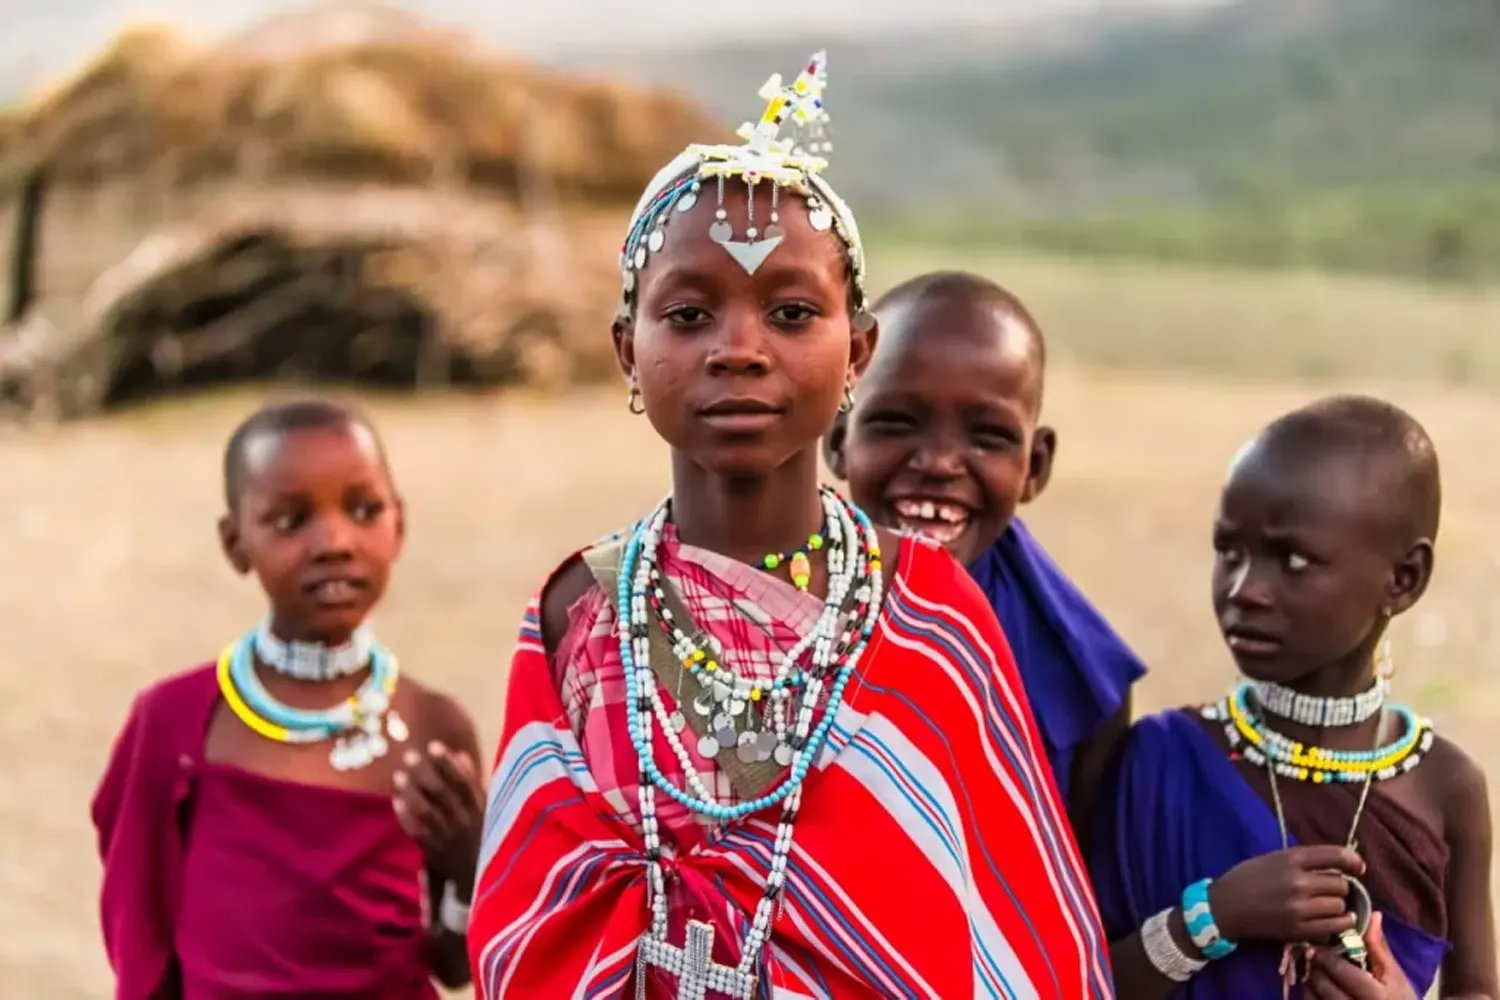 Maasai viilage mortobike your